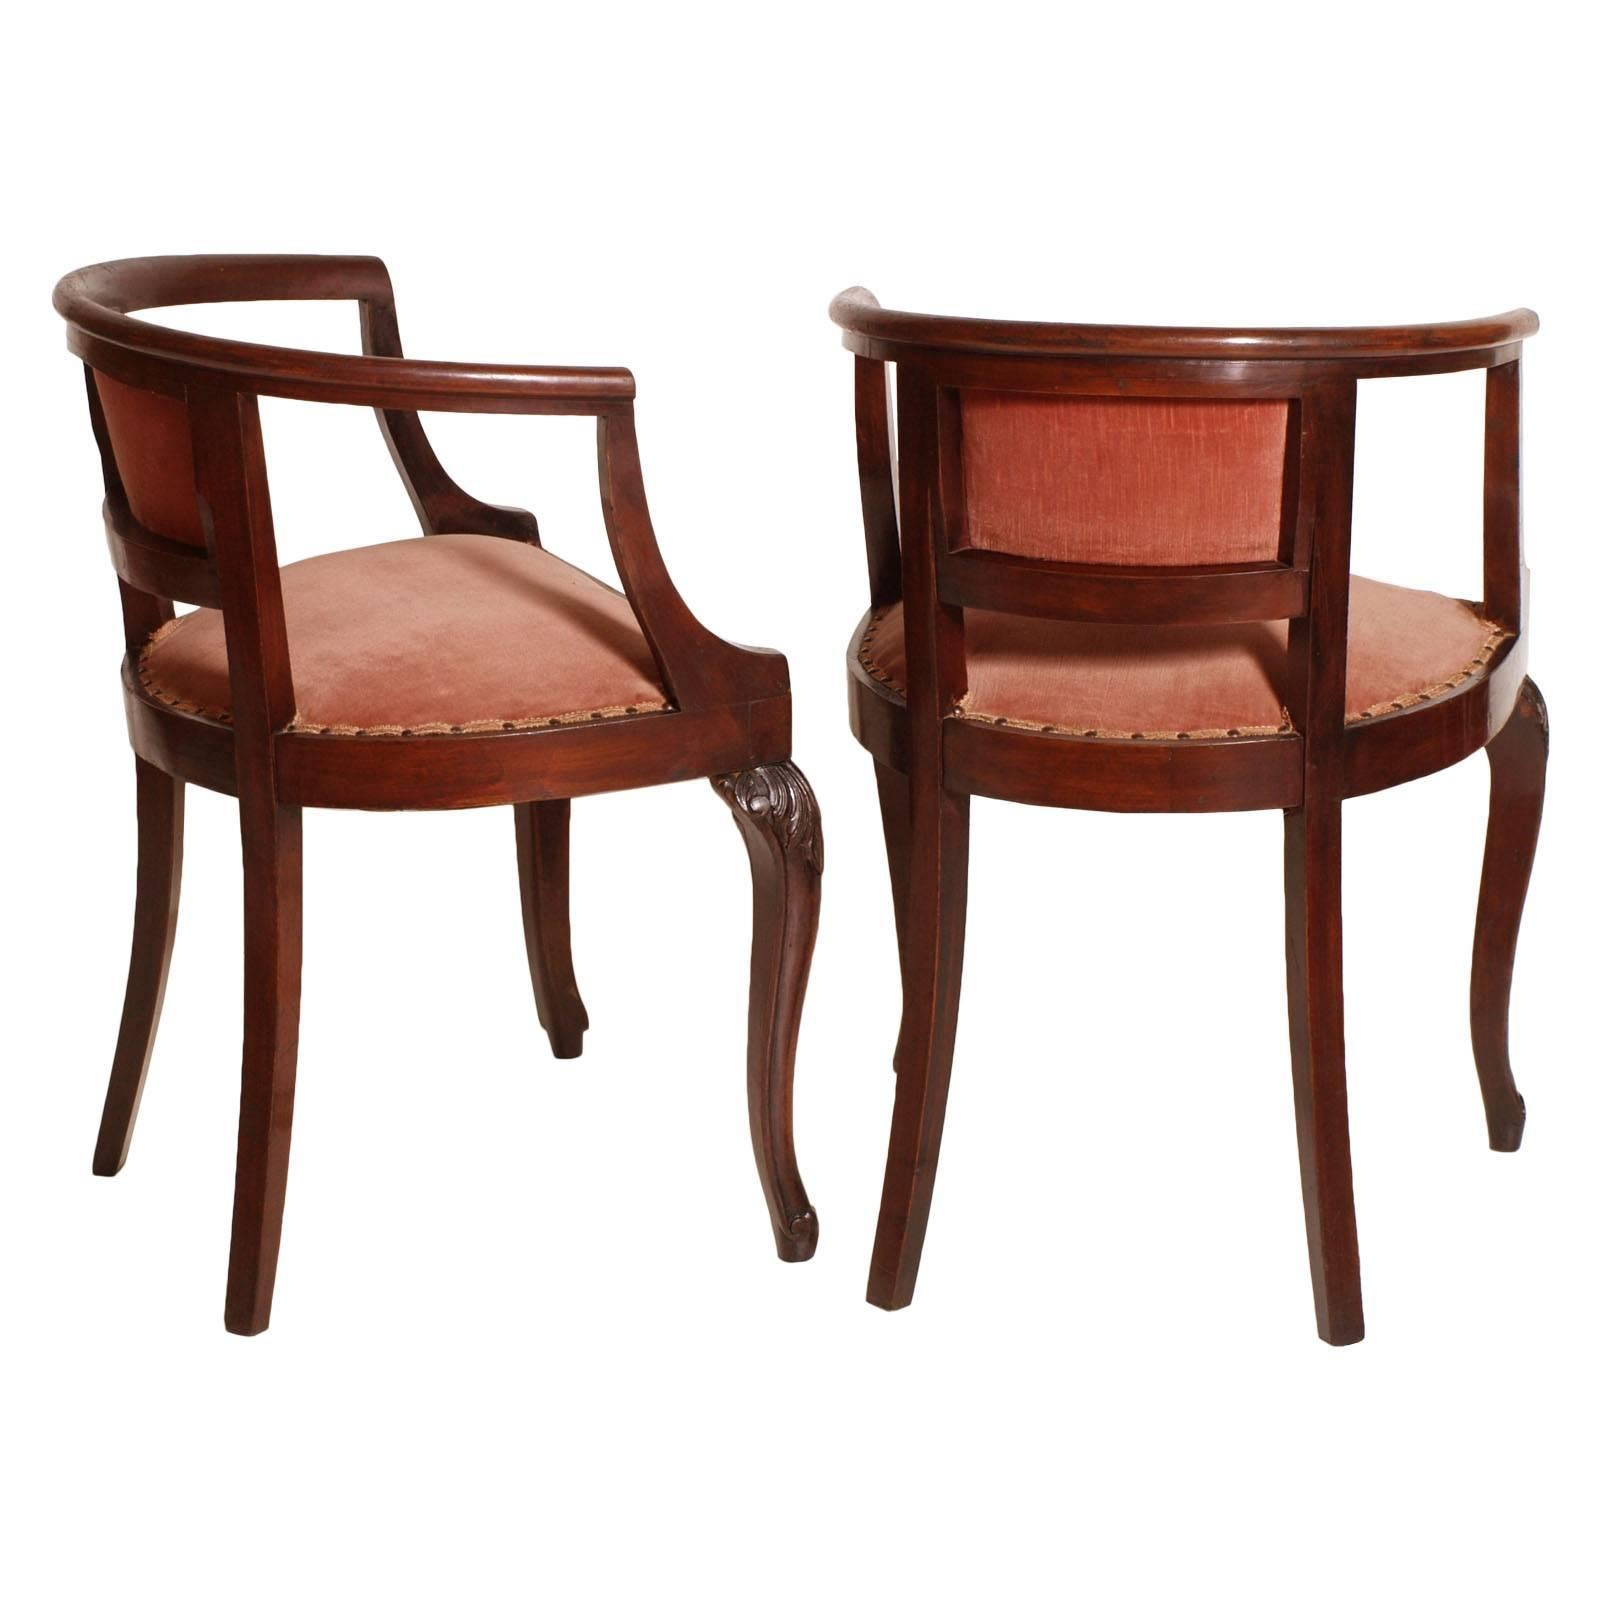 Italian 1910s Art Nouveau Pair of Pozzeto Chairs, Hand-Carved Walnut, Original Fabric